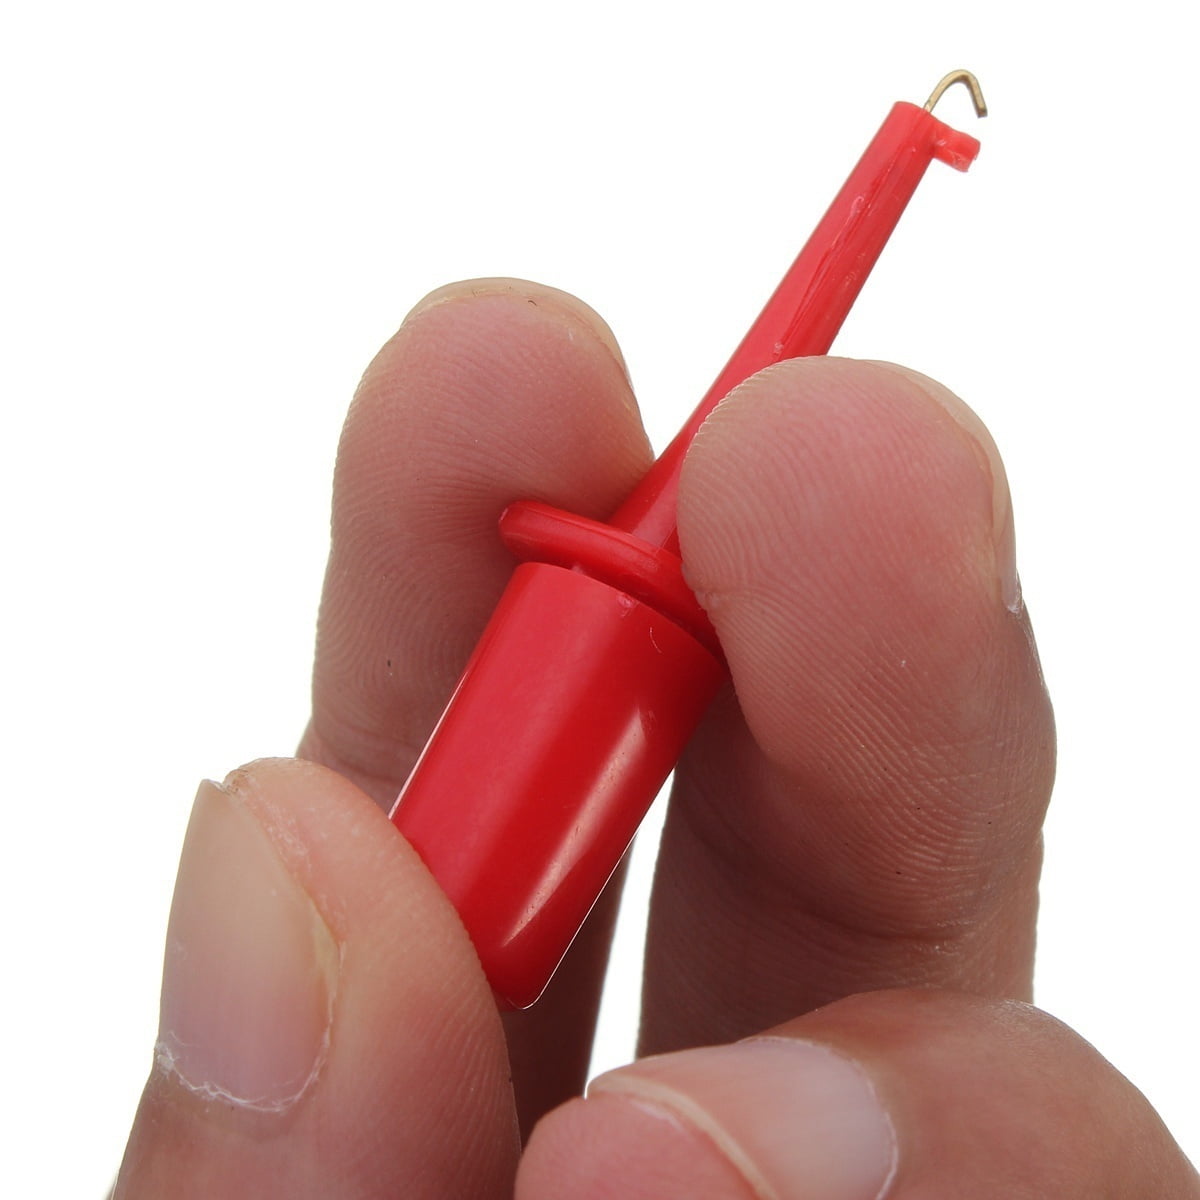 2PC SMT/SMD IC Multimeter Lead Wire Kit Test Hook Clip Grabbers Test Probe 